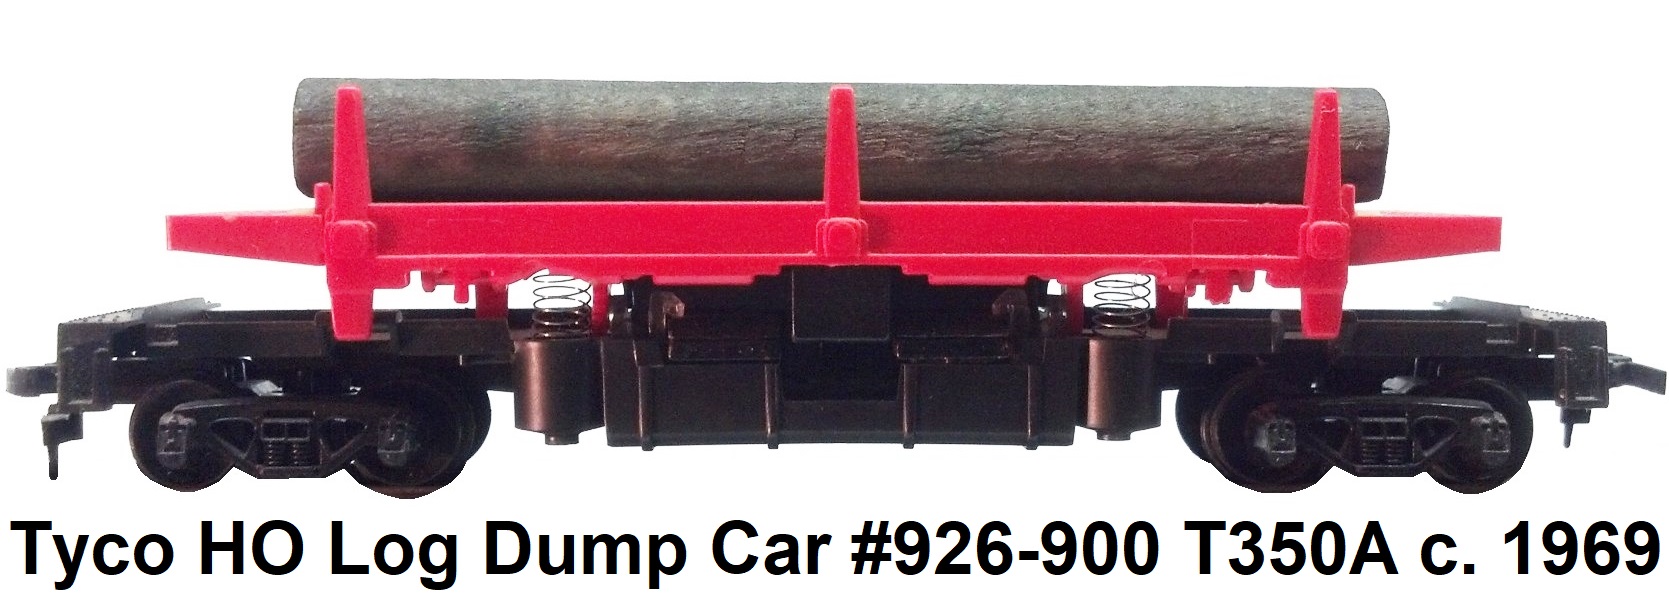 Tyco HO Automated Log Dump Car #926-900 T350A c. 1969 red box era